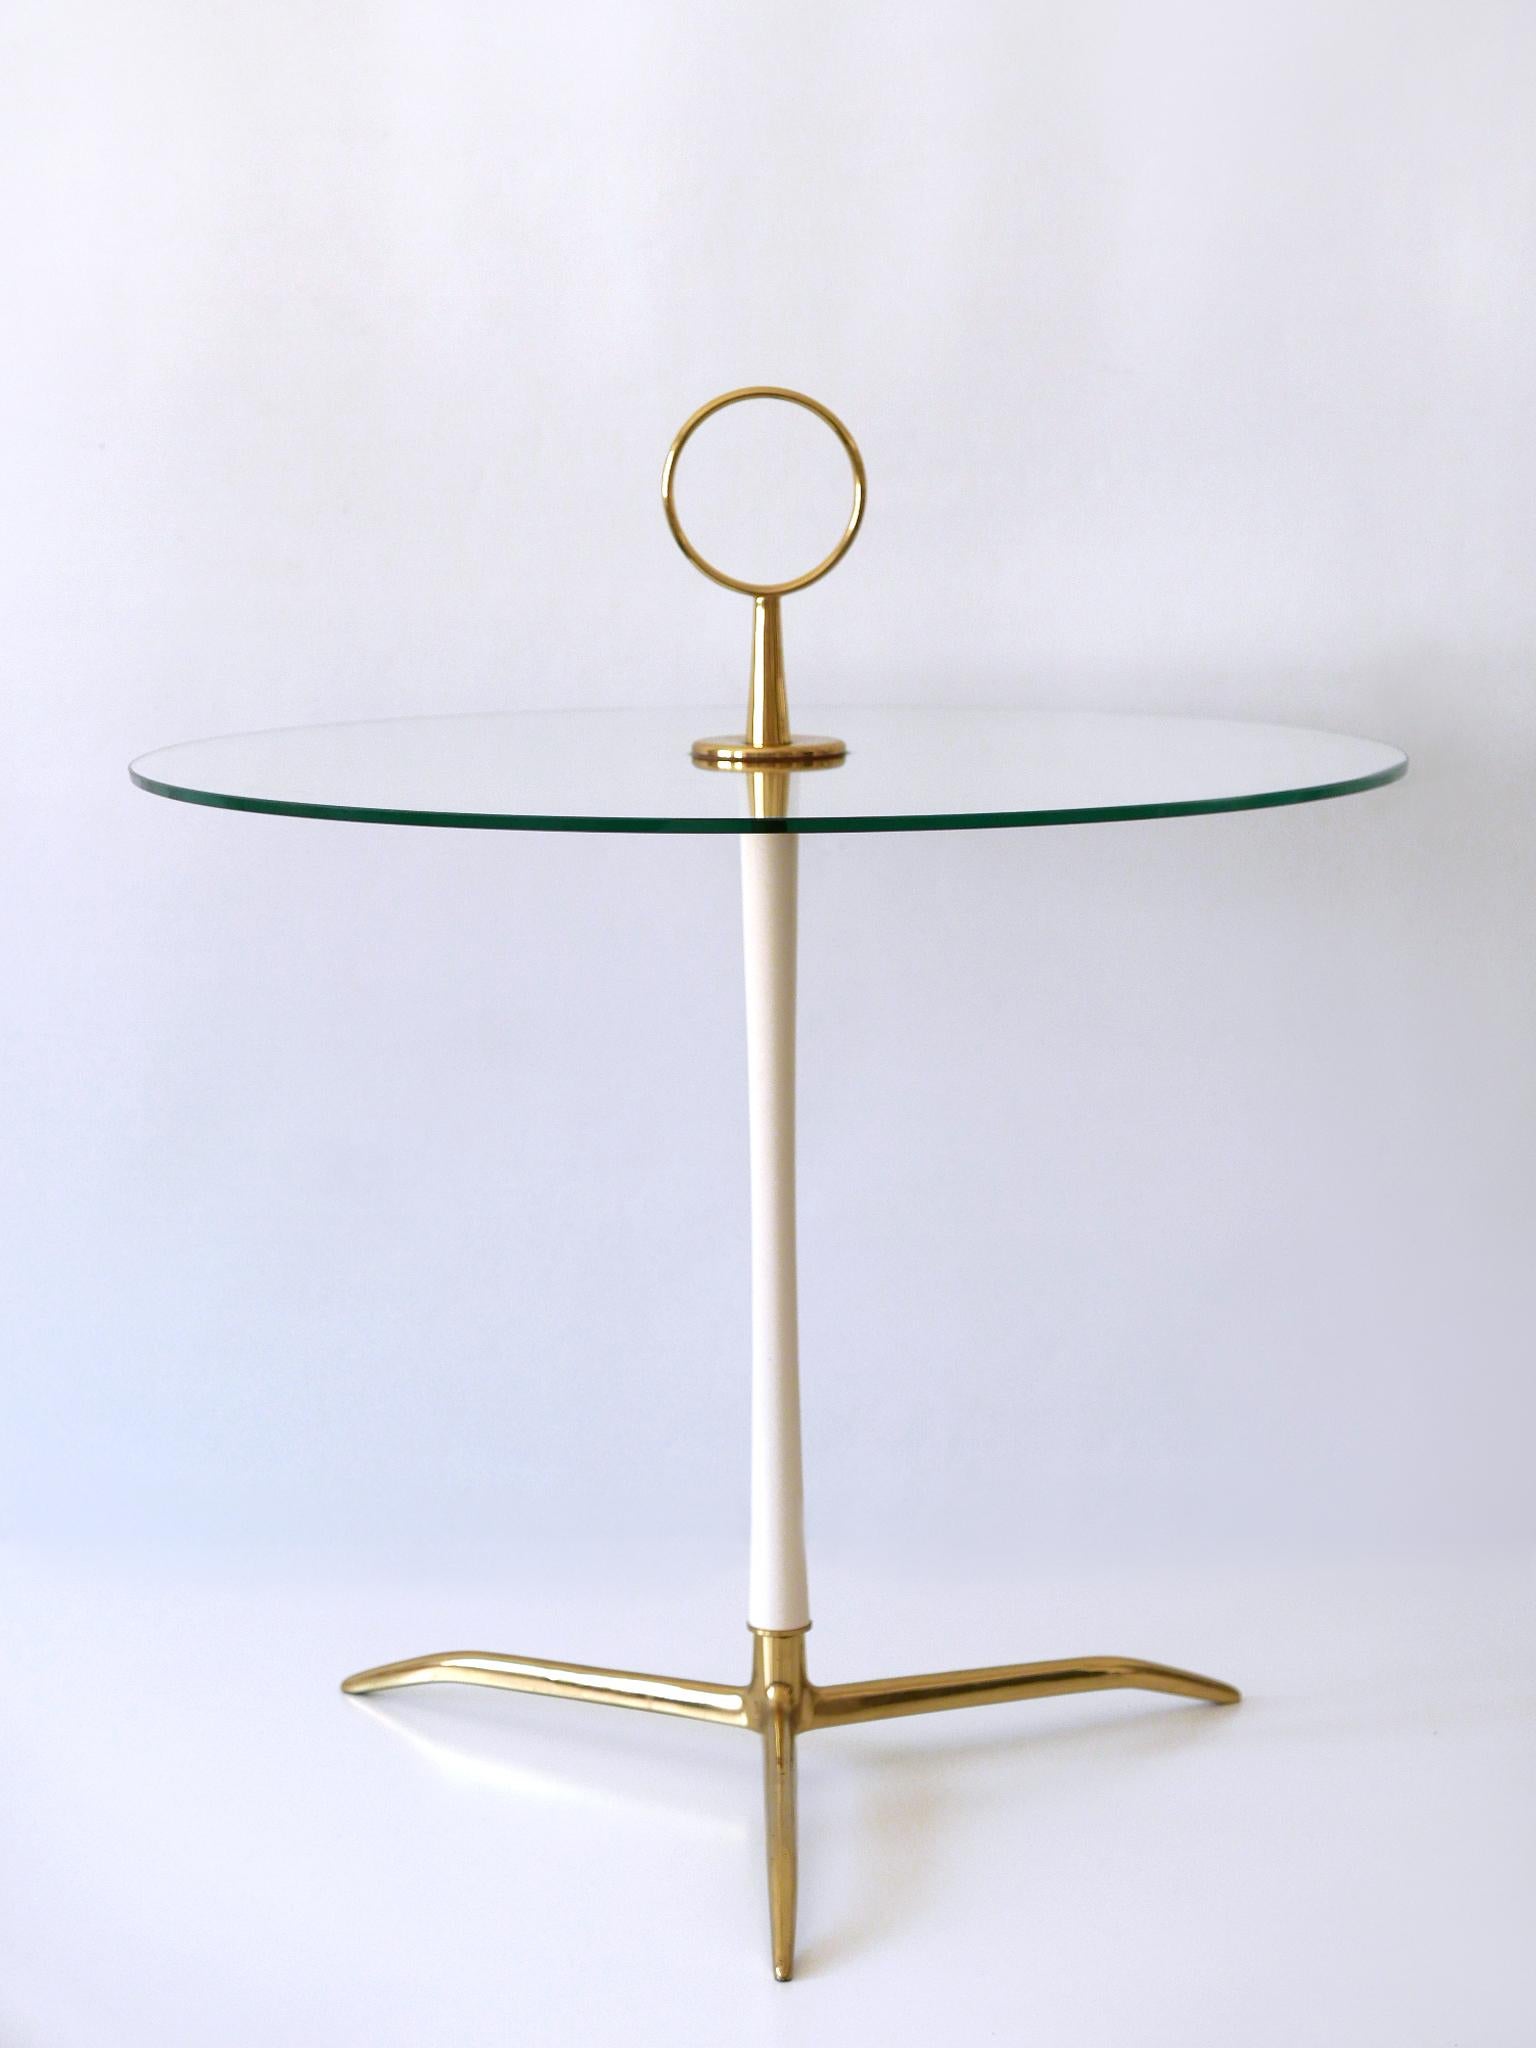 Cast Elegant Mid-Century Modern Side Table by Vereinigte Werkstätten Germany 1950s For Sale